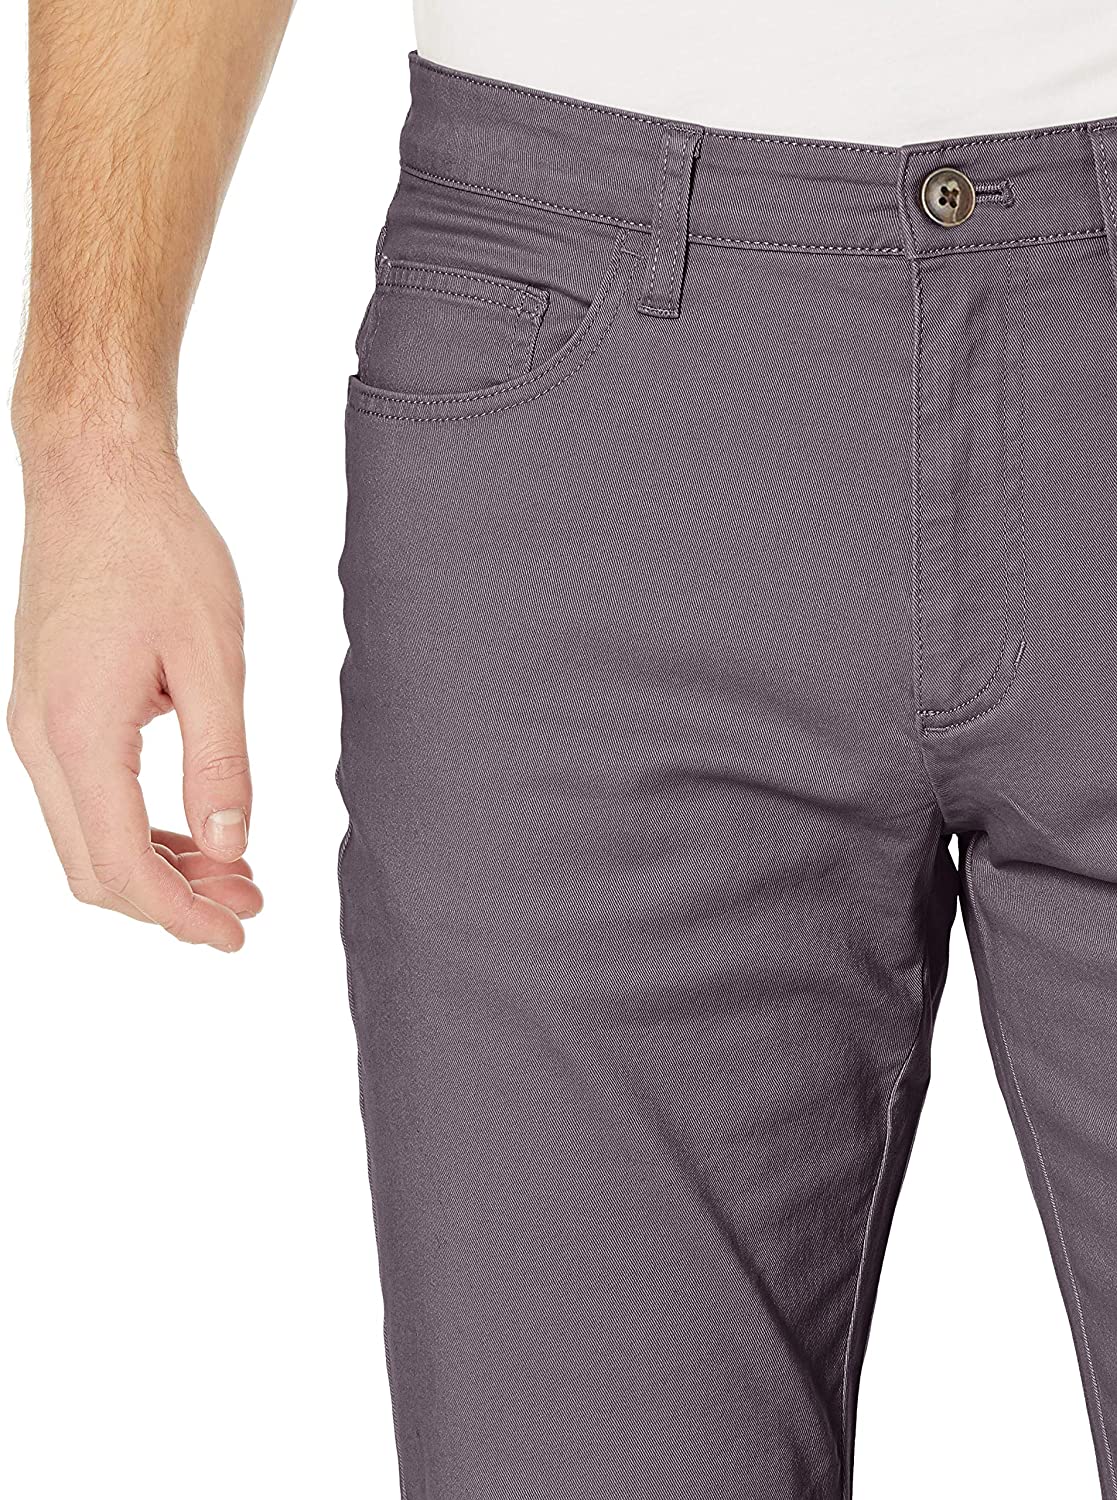 Goodthreads Men's Slim-fit 5-Pocket Comfort Stretch Chino, Grey, Size